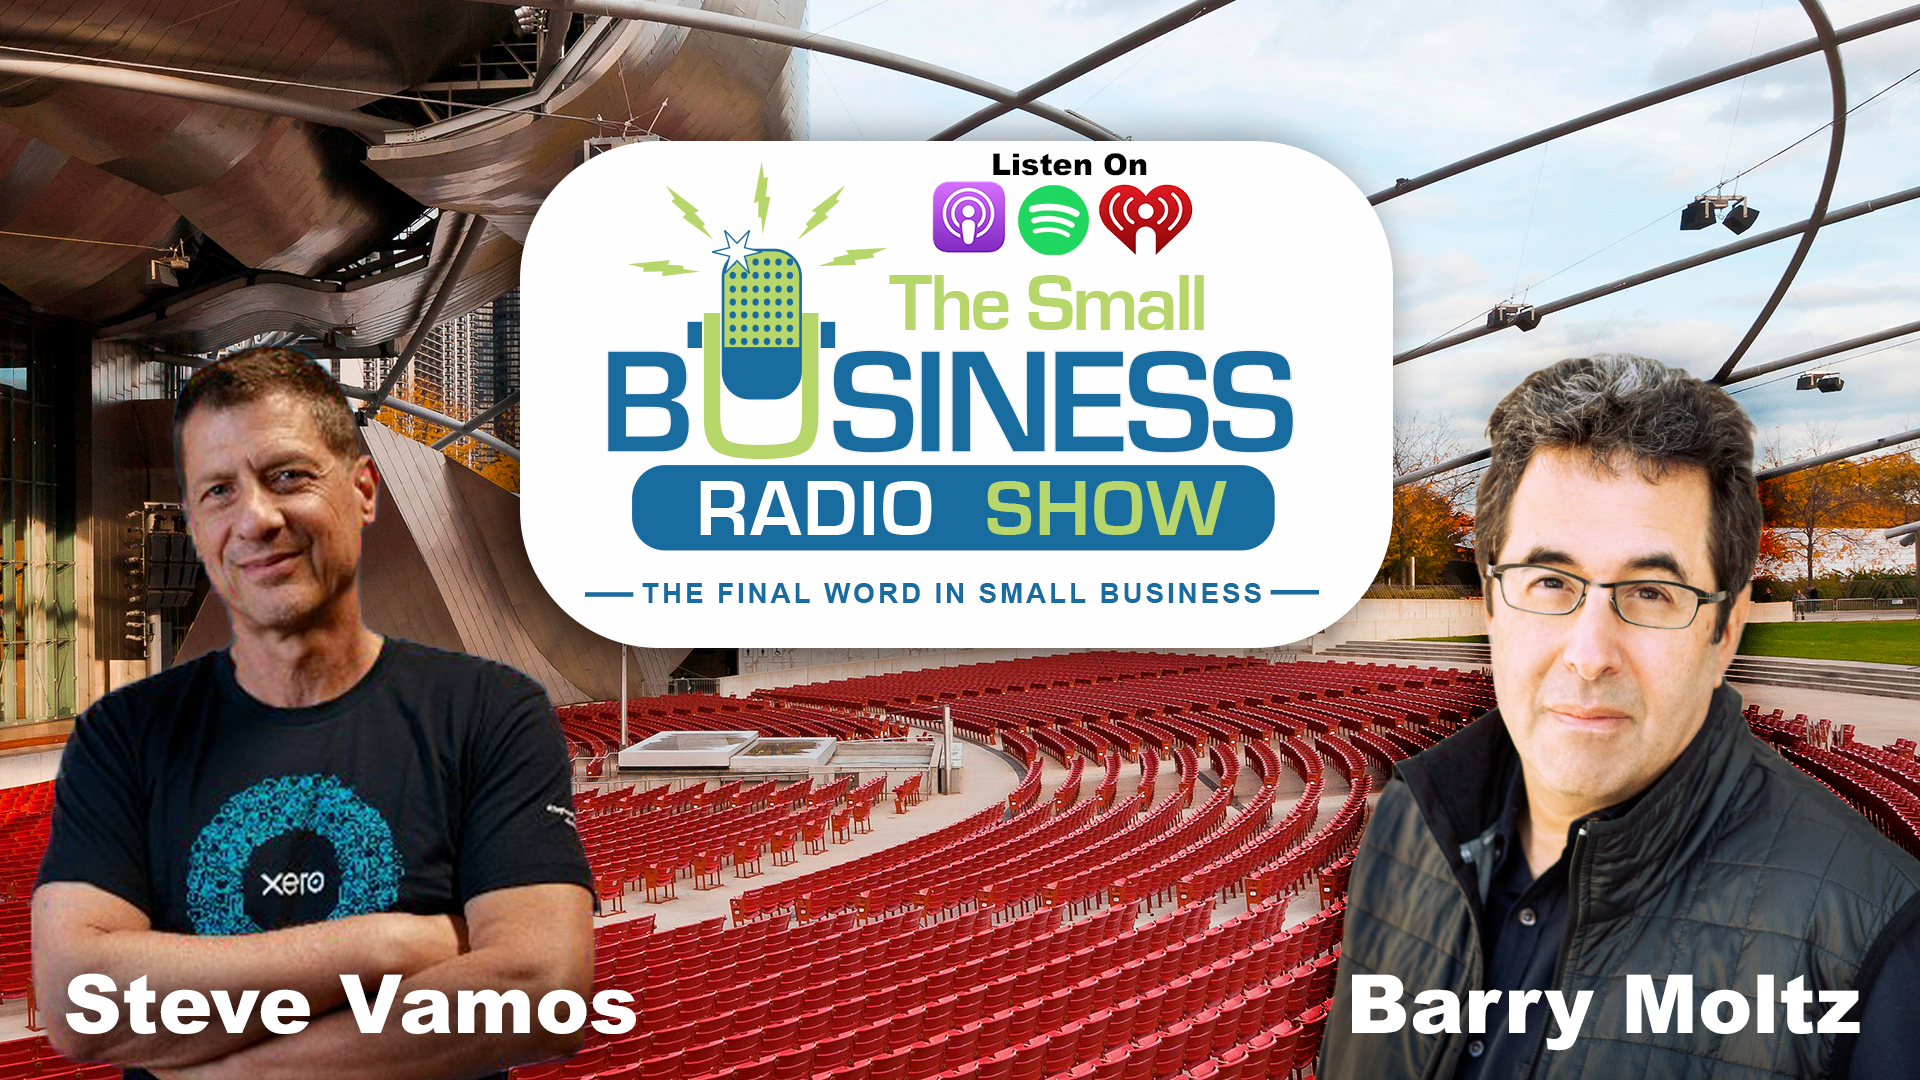 Steve Vamos on The Small Business Radio Show